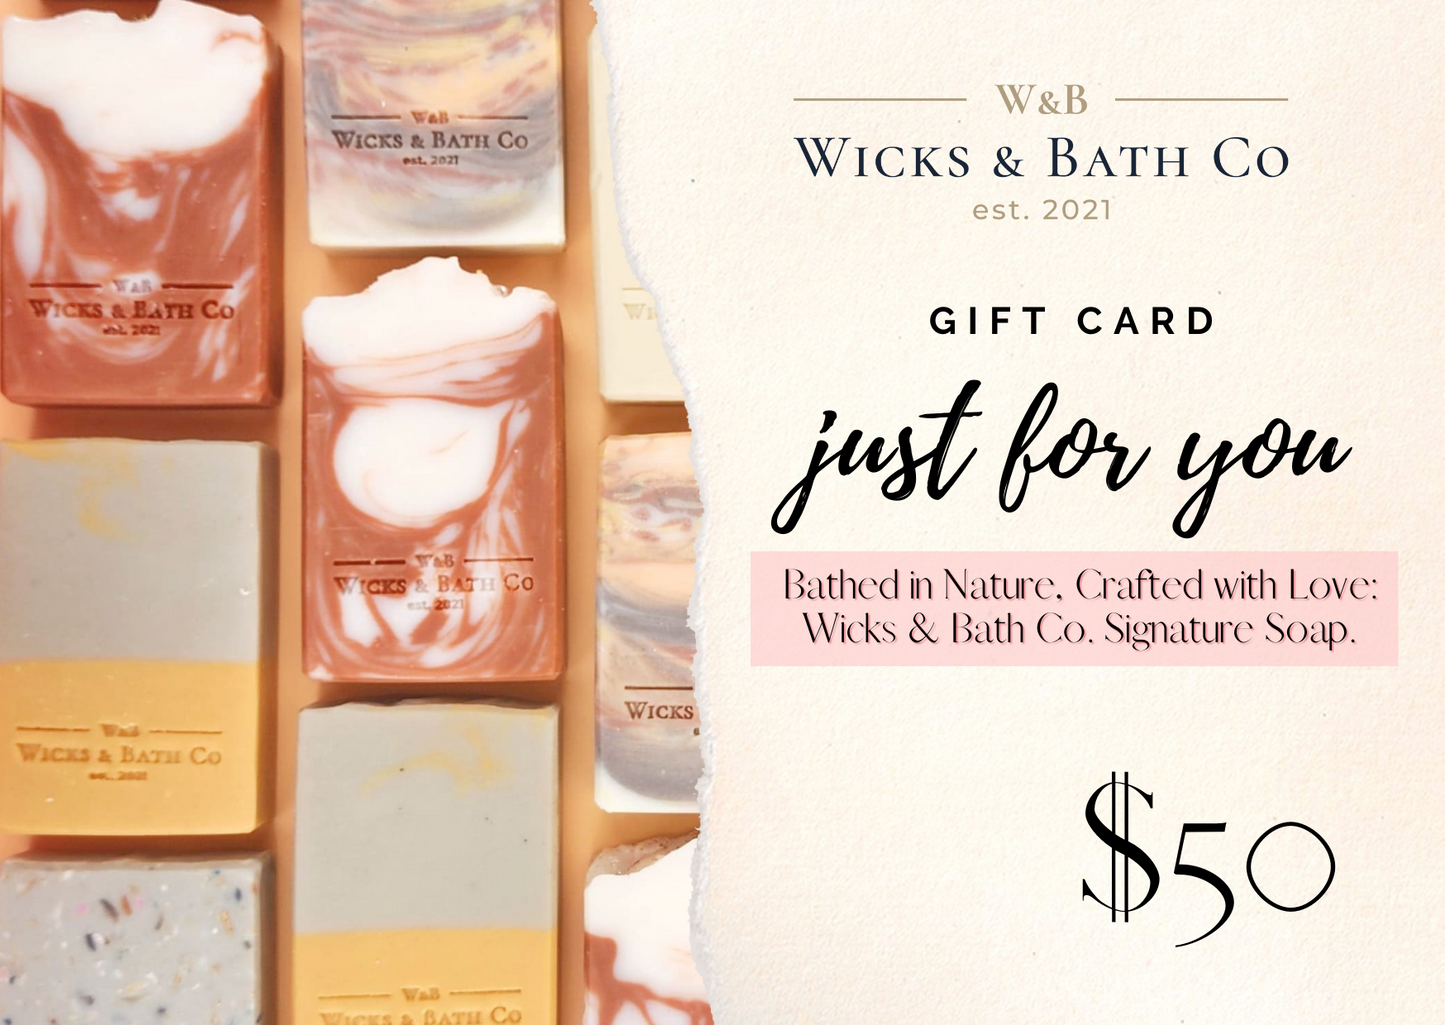 Wicks & Bath Co. Gift Cards - Wicks and Bath Co.